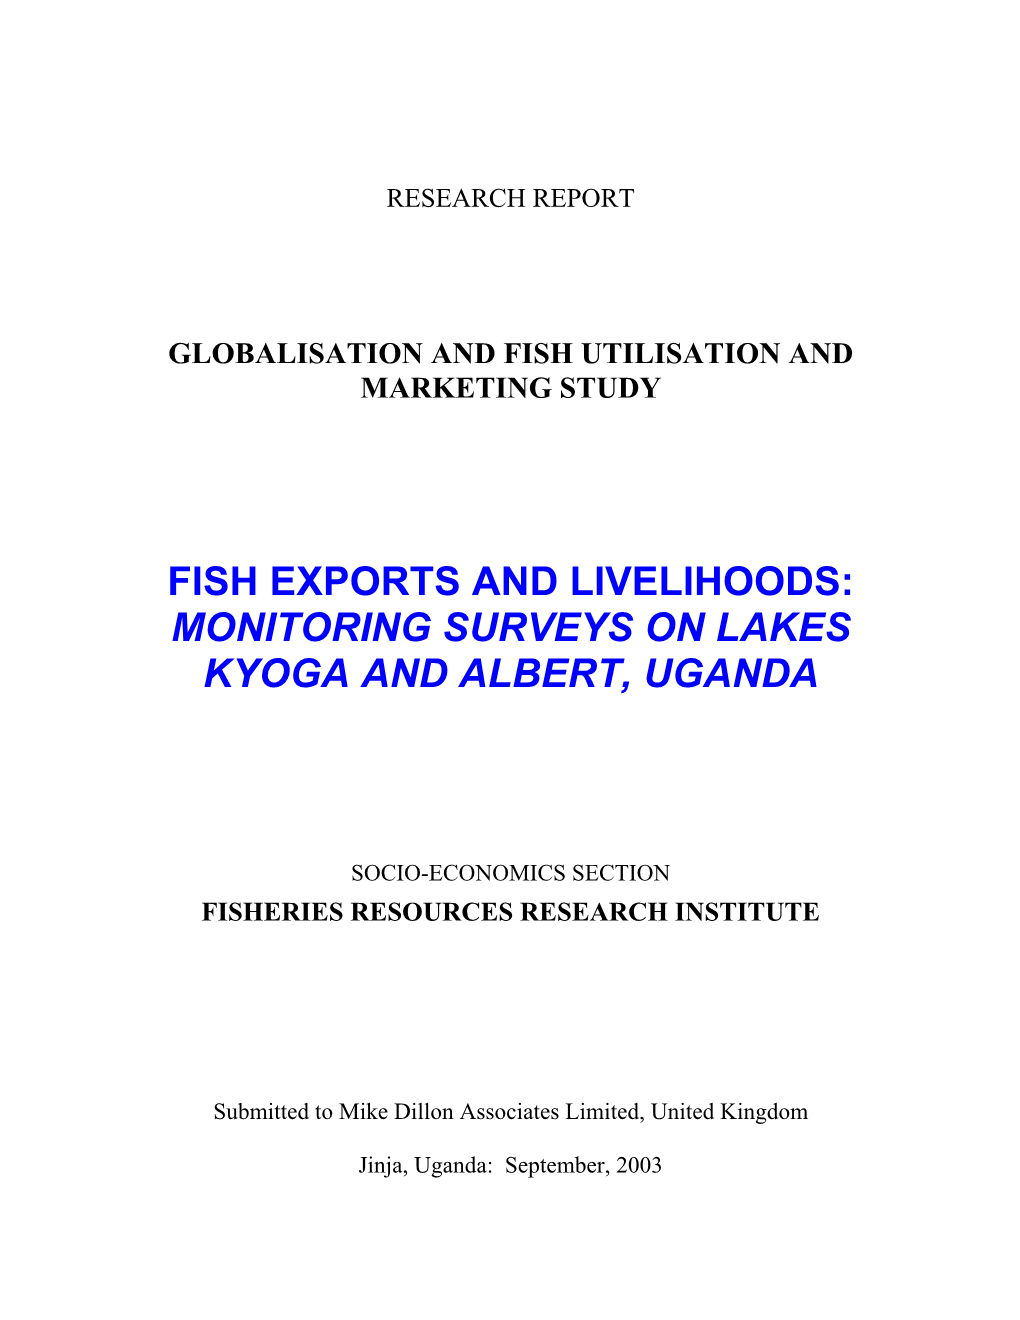 Monitoring Surveys on Lakes Kyoga and Albert, Uganda